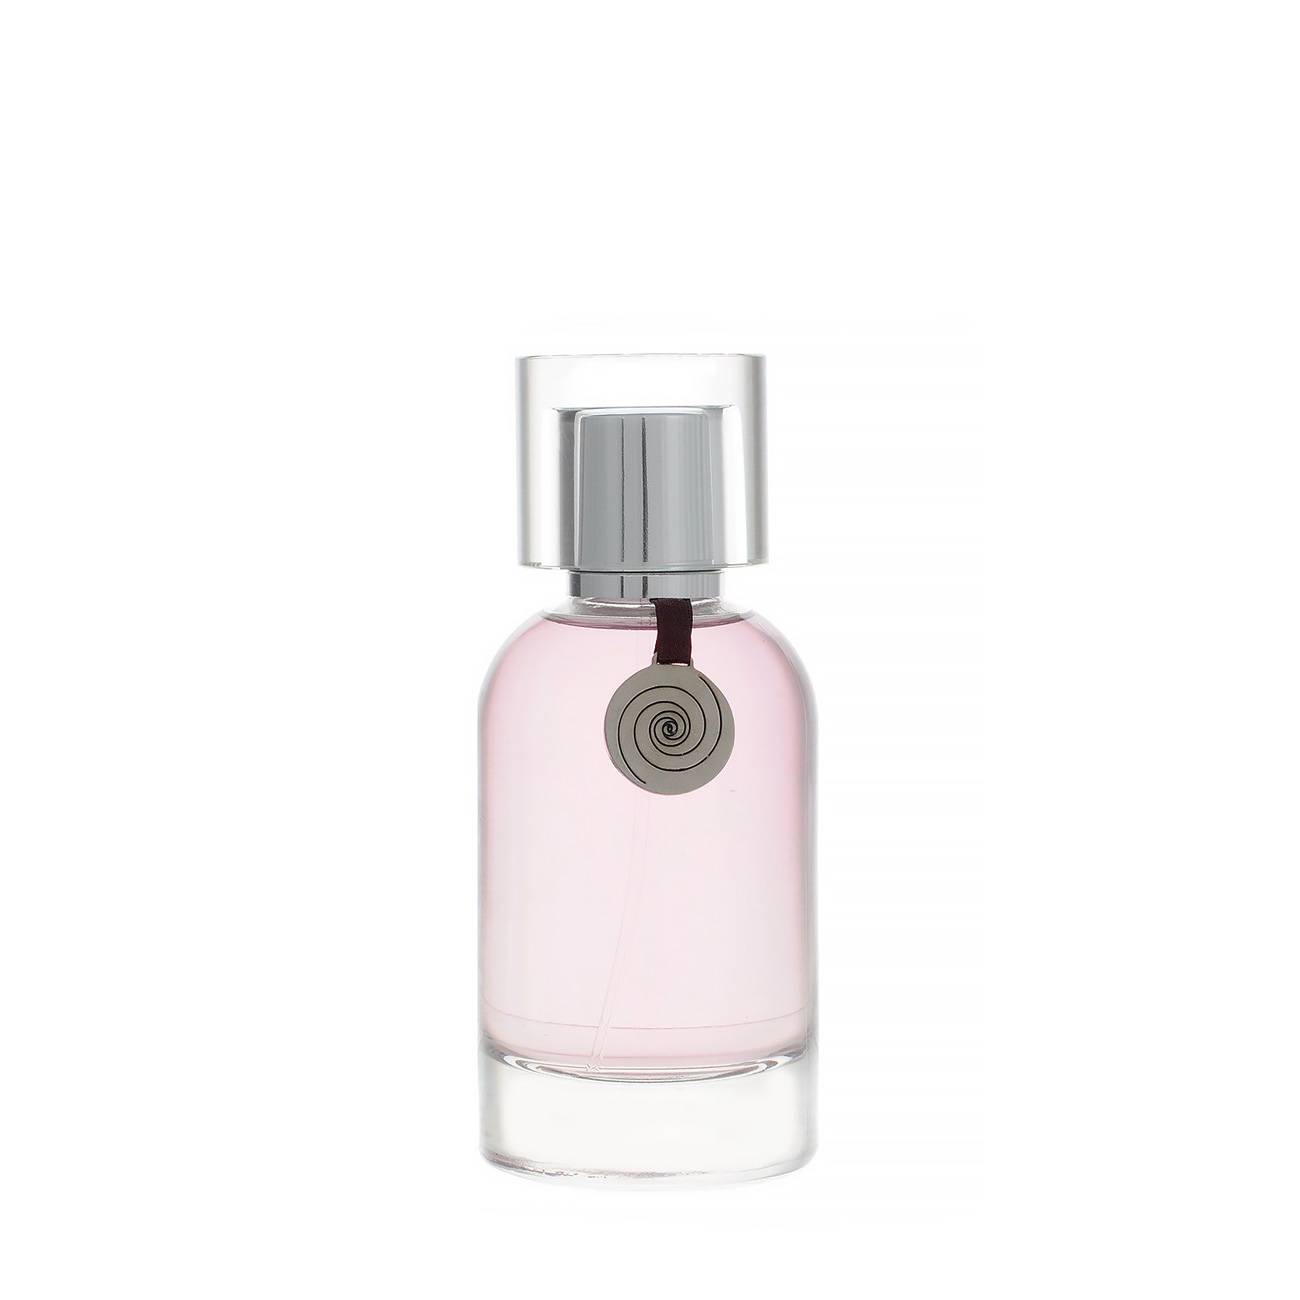 Apa de Parfum Egofacto FOOL FOR LOVE 50ml cu comanda online